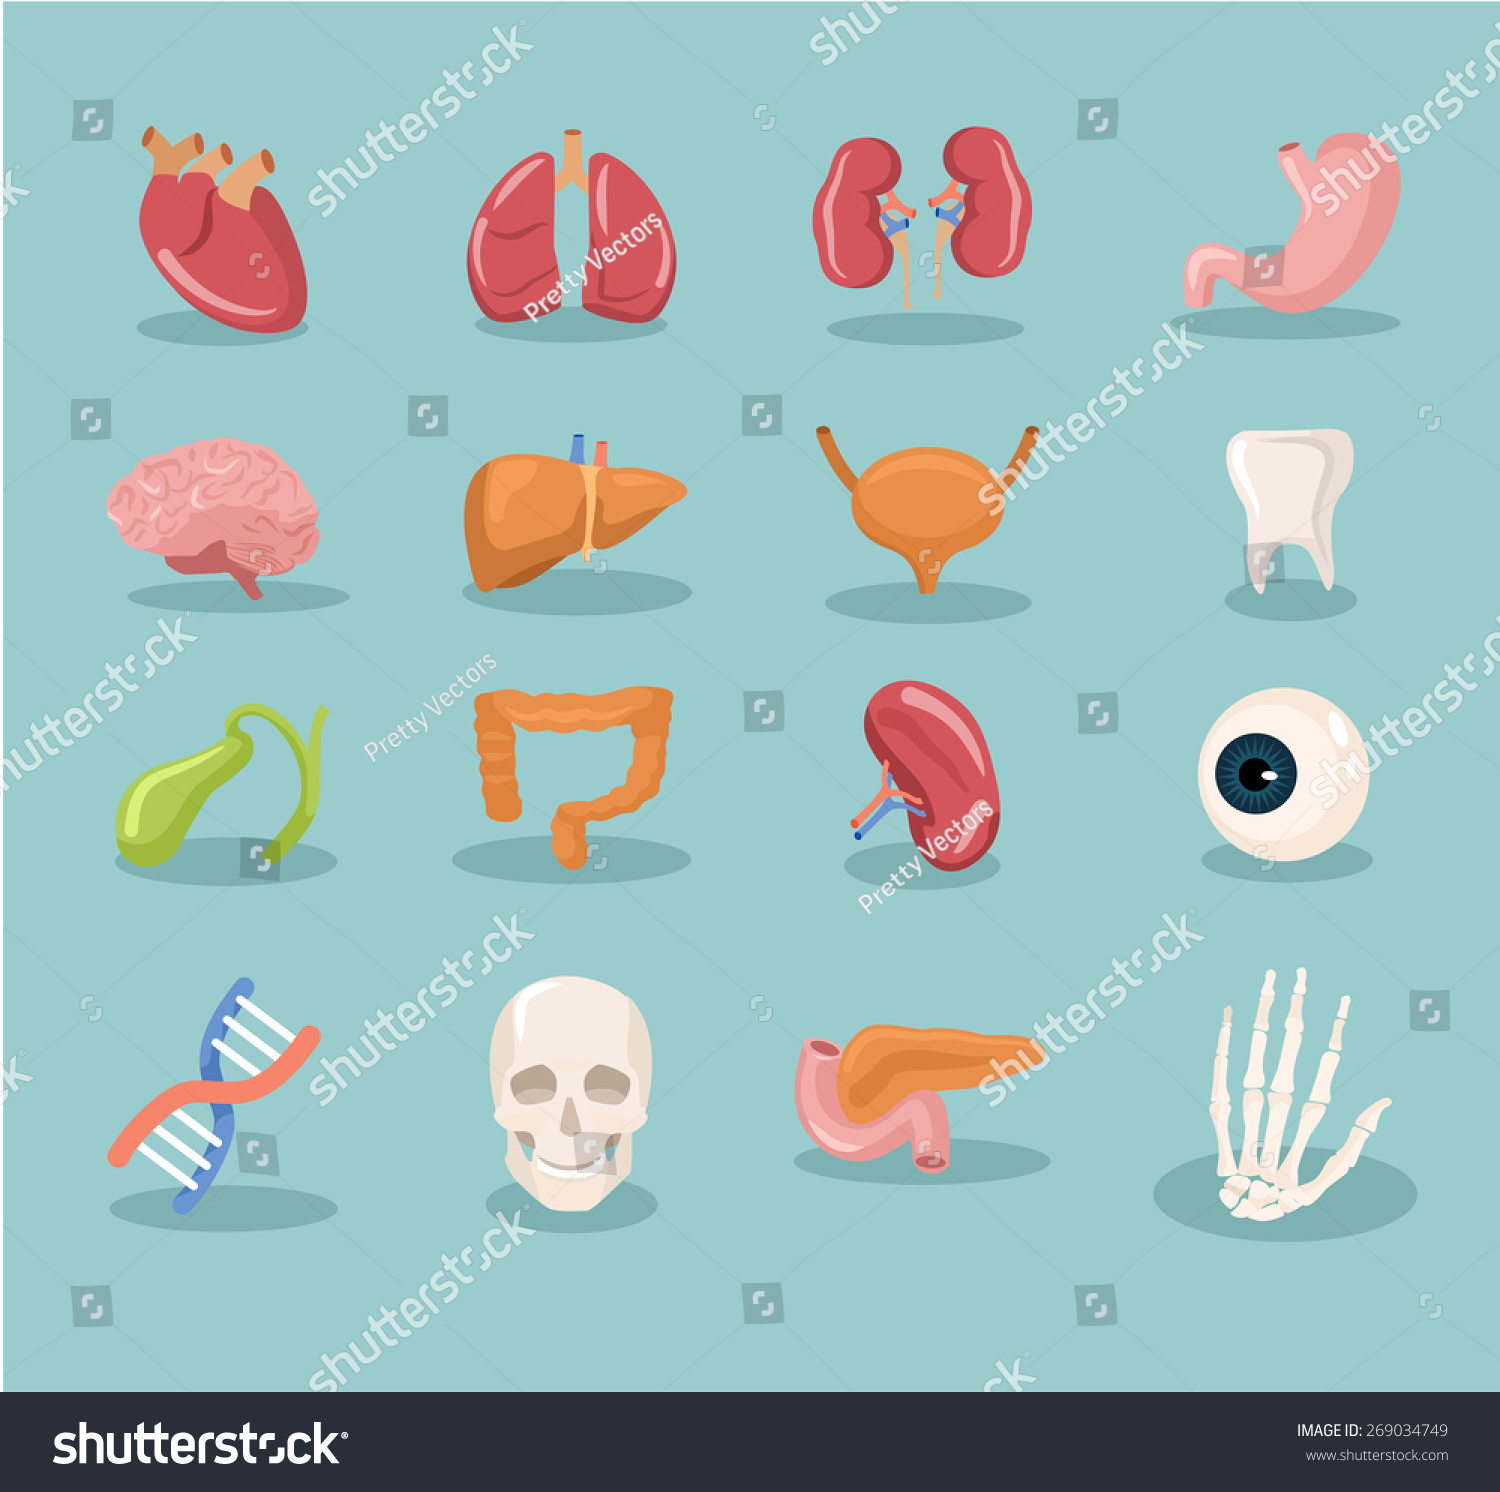 Vector Internal Organs Cartoon Icon Set - 269034749 : Shutterstock